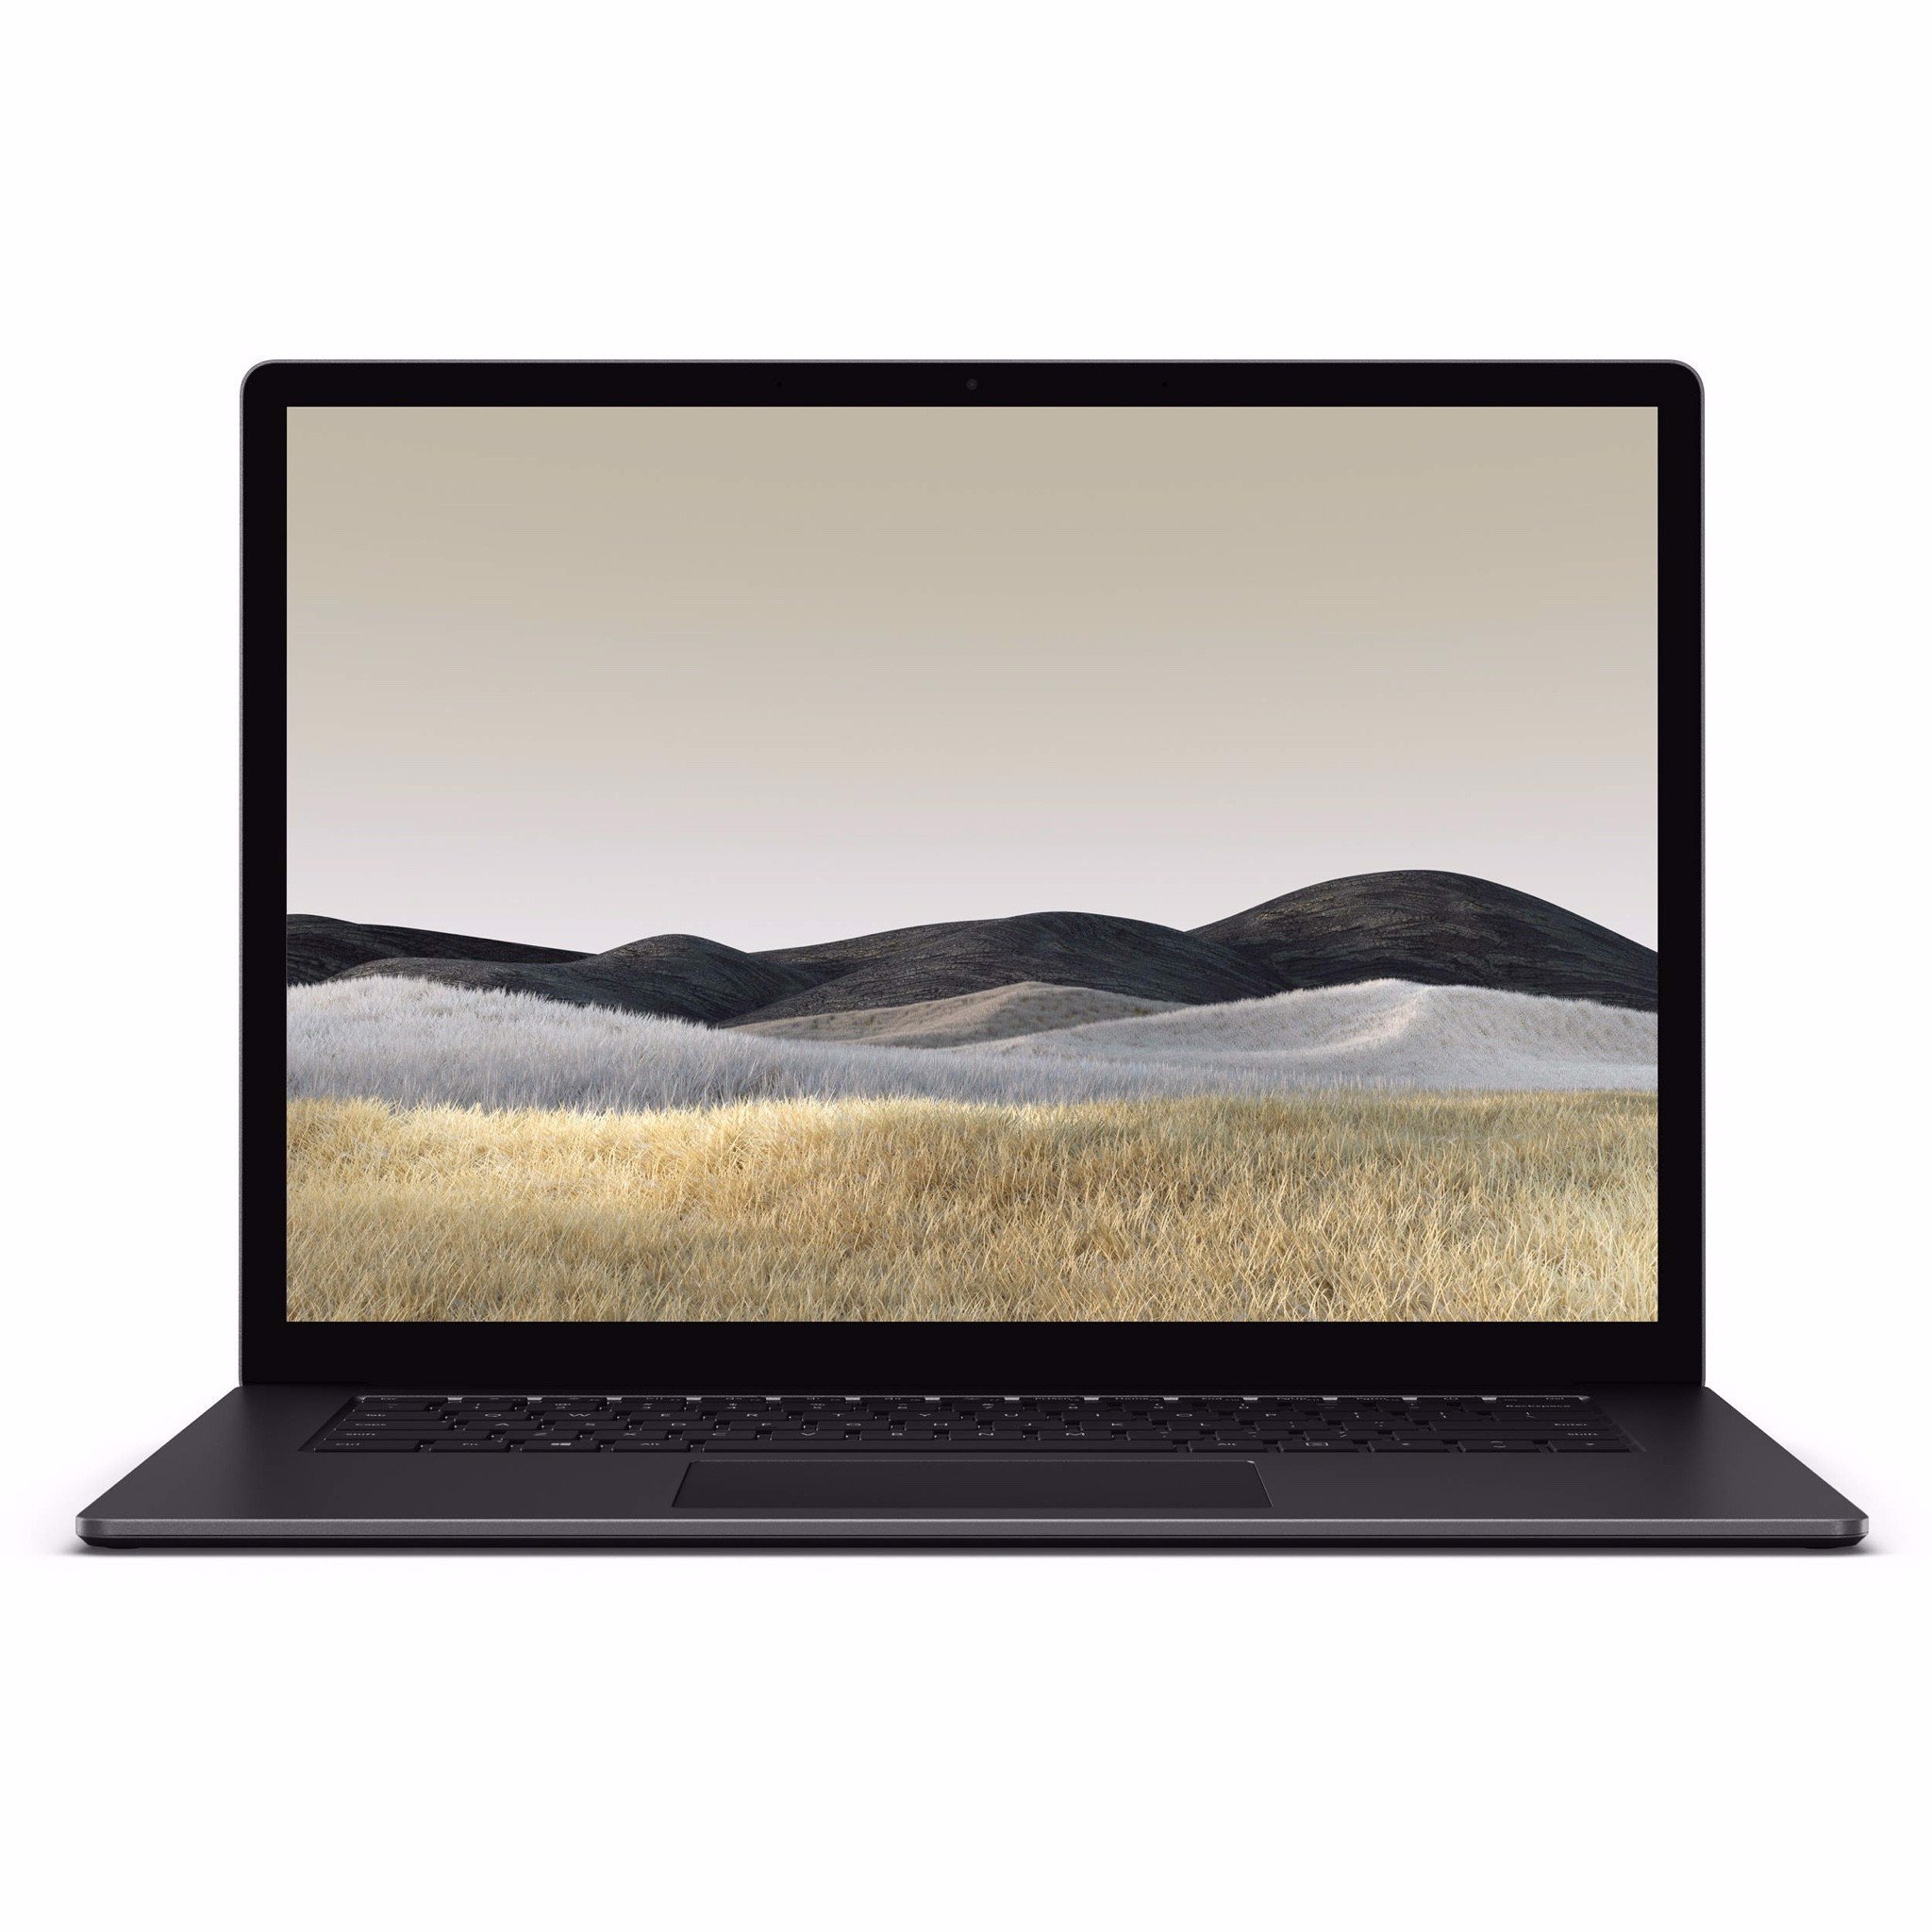 Laptop Microsoft Surface Laptop 3 - Inte Core i7-1065G7, 16GB RAM, SSD 512GB, Intel Iris Plus, 13.5 inch